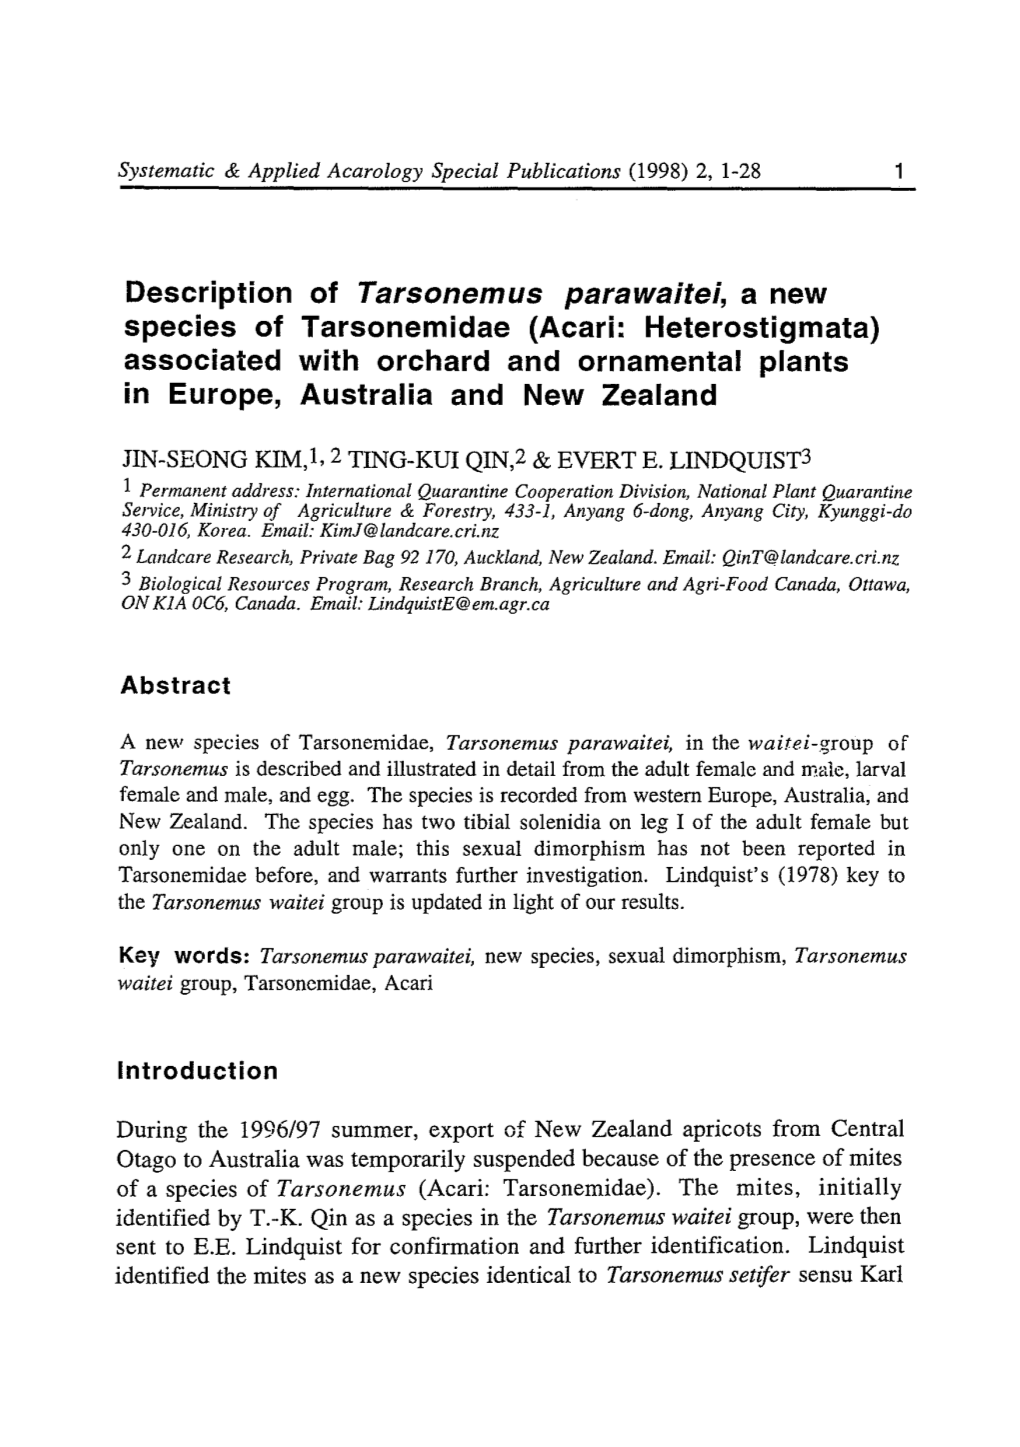 Description of Tarsonemus Parawaitei, a New Species